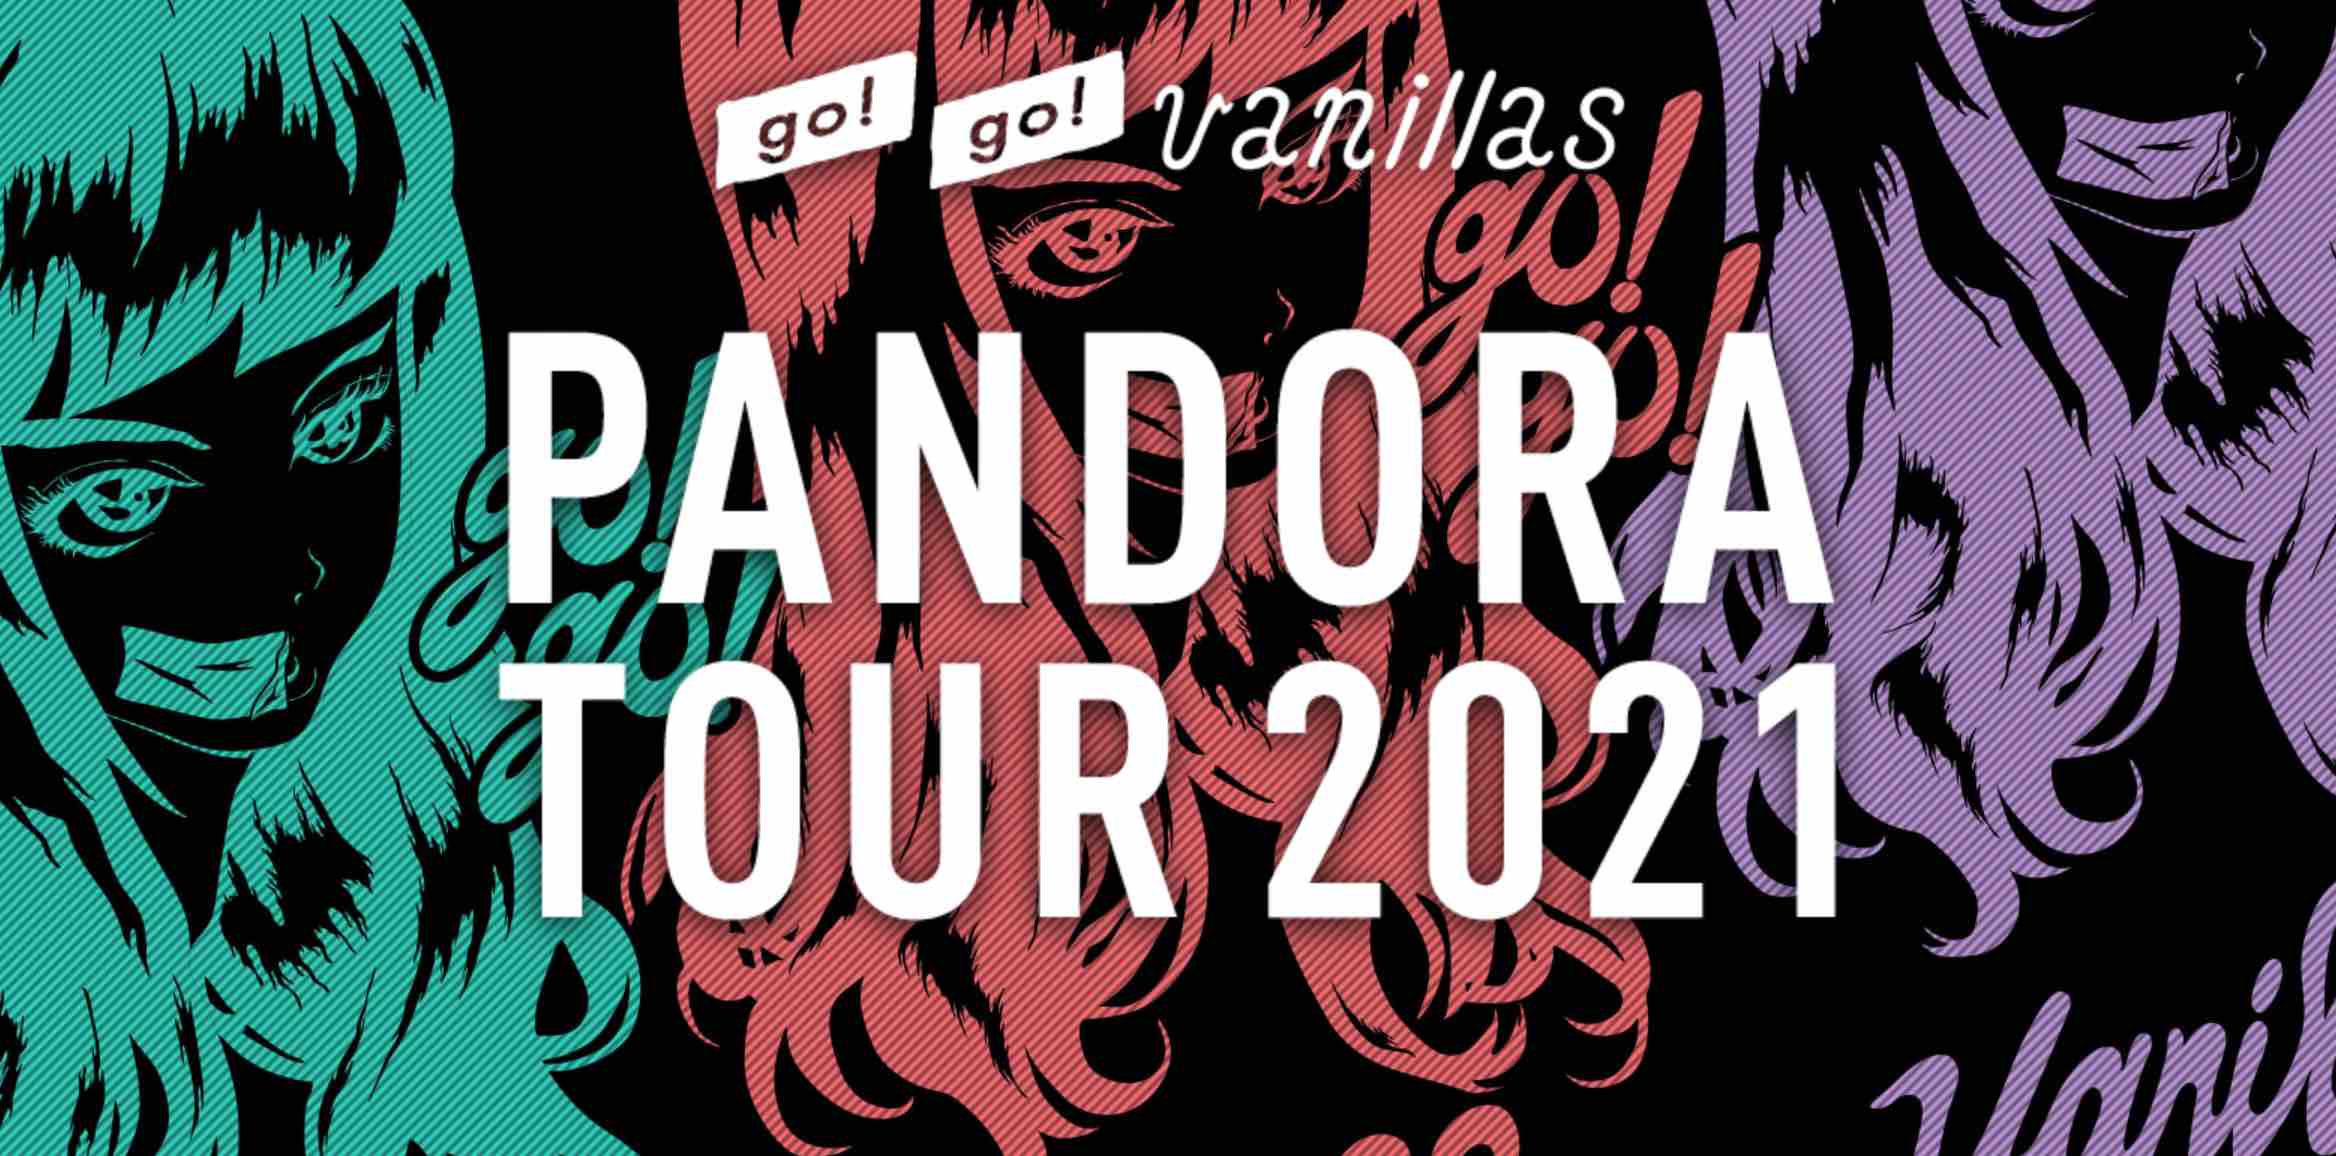 Zepp Haneda<span class="live-title"> PANDORA TOUR 2021 〜Mr.&Mrs. HOPE〜</span>